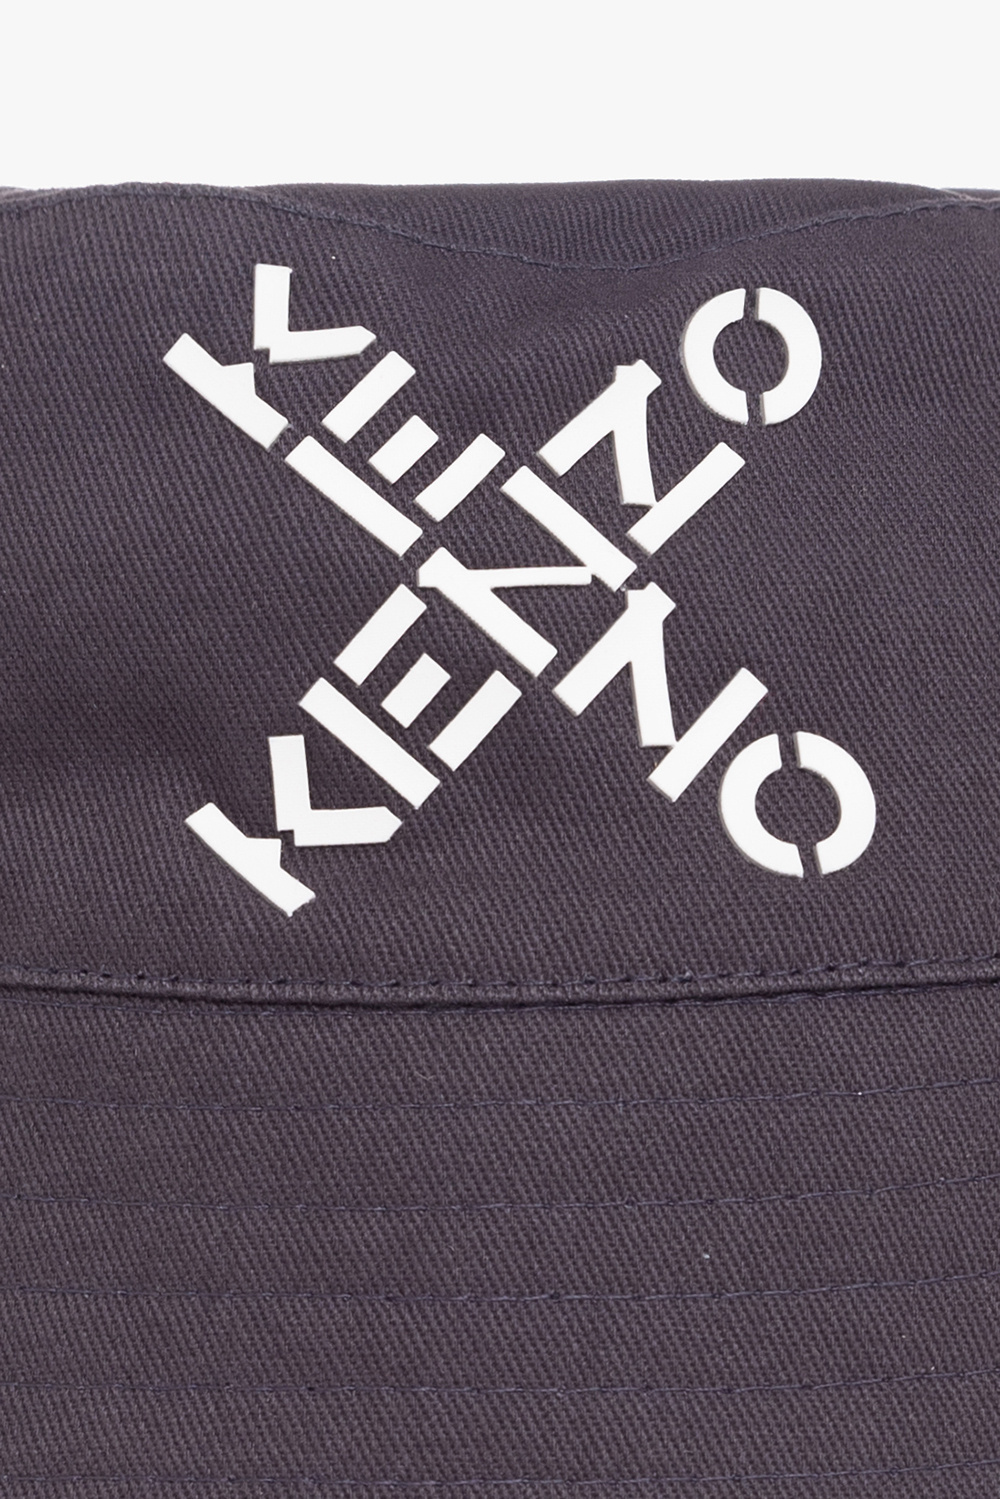 Kenzo Kids Bucket hat Marrone schwarz €34